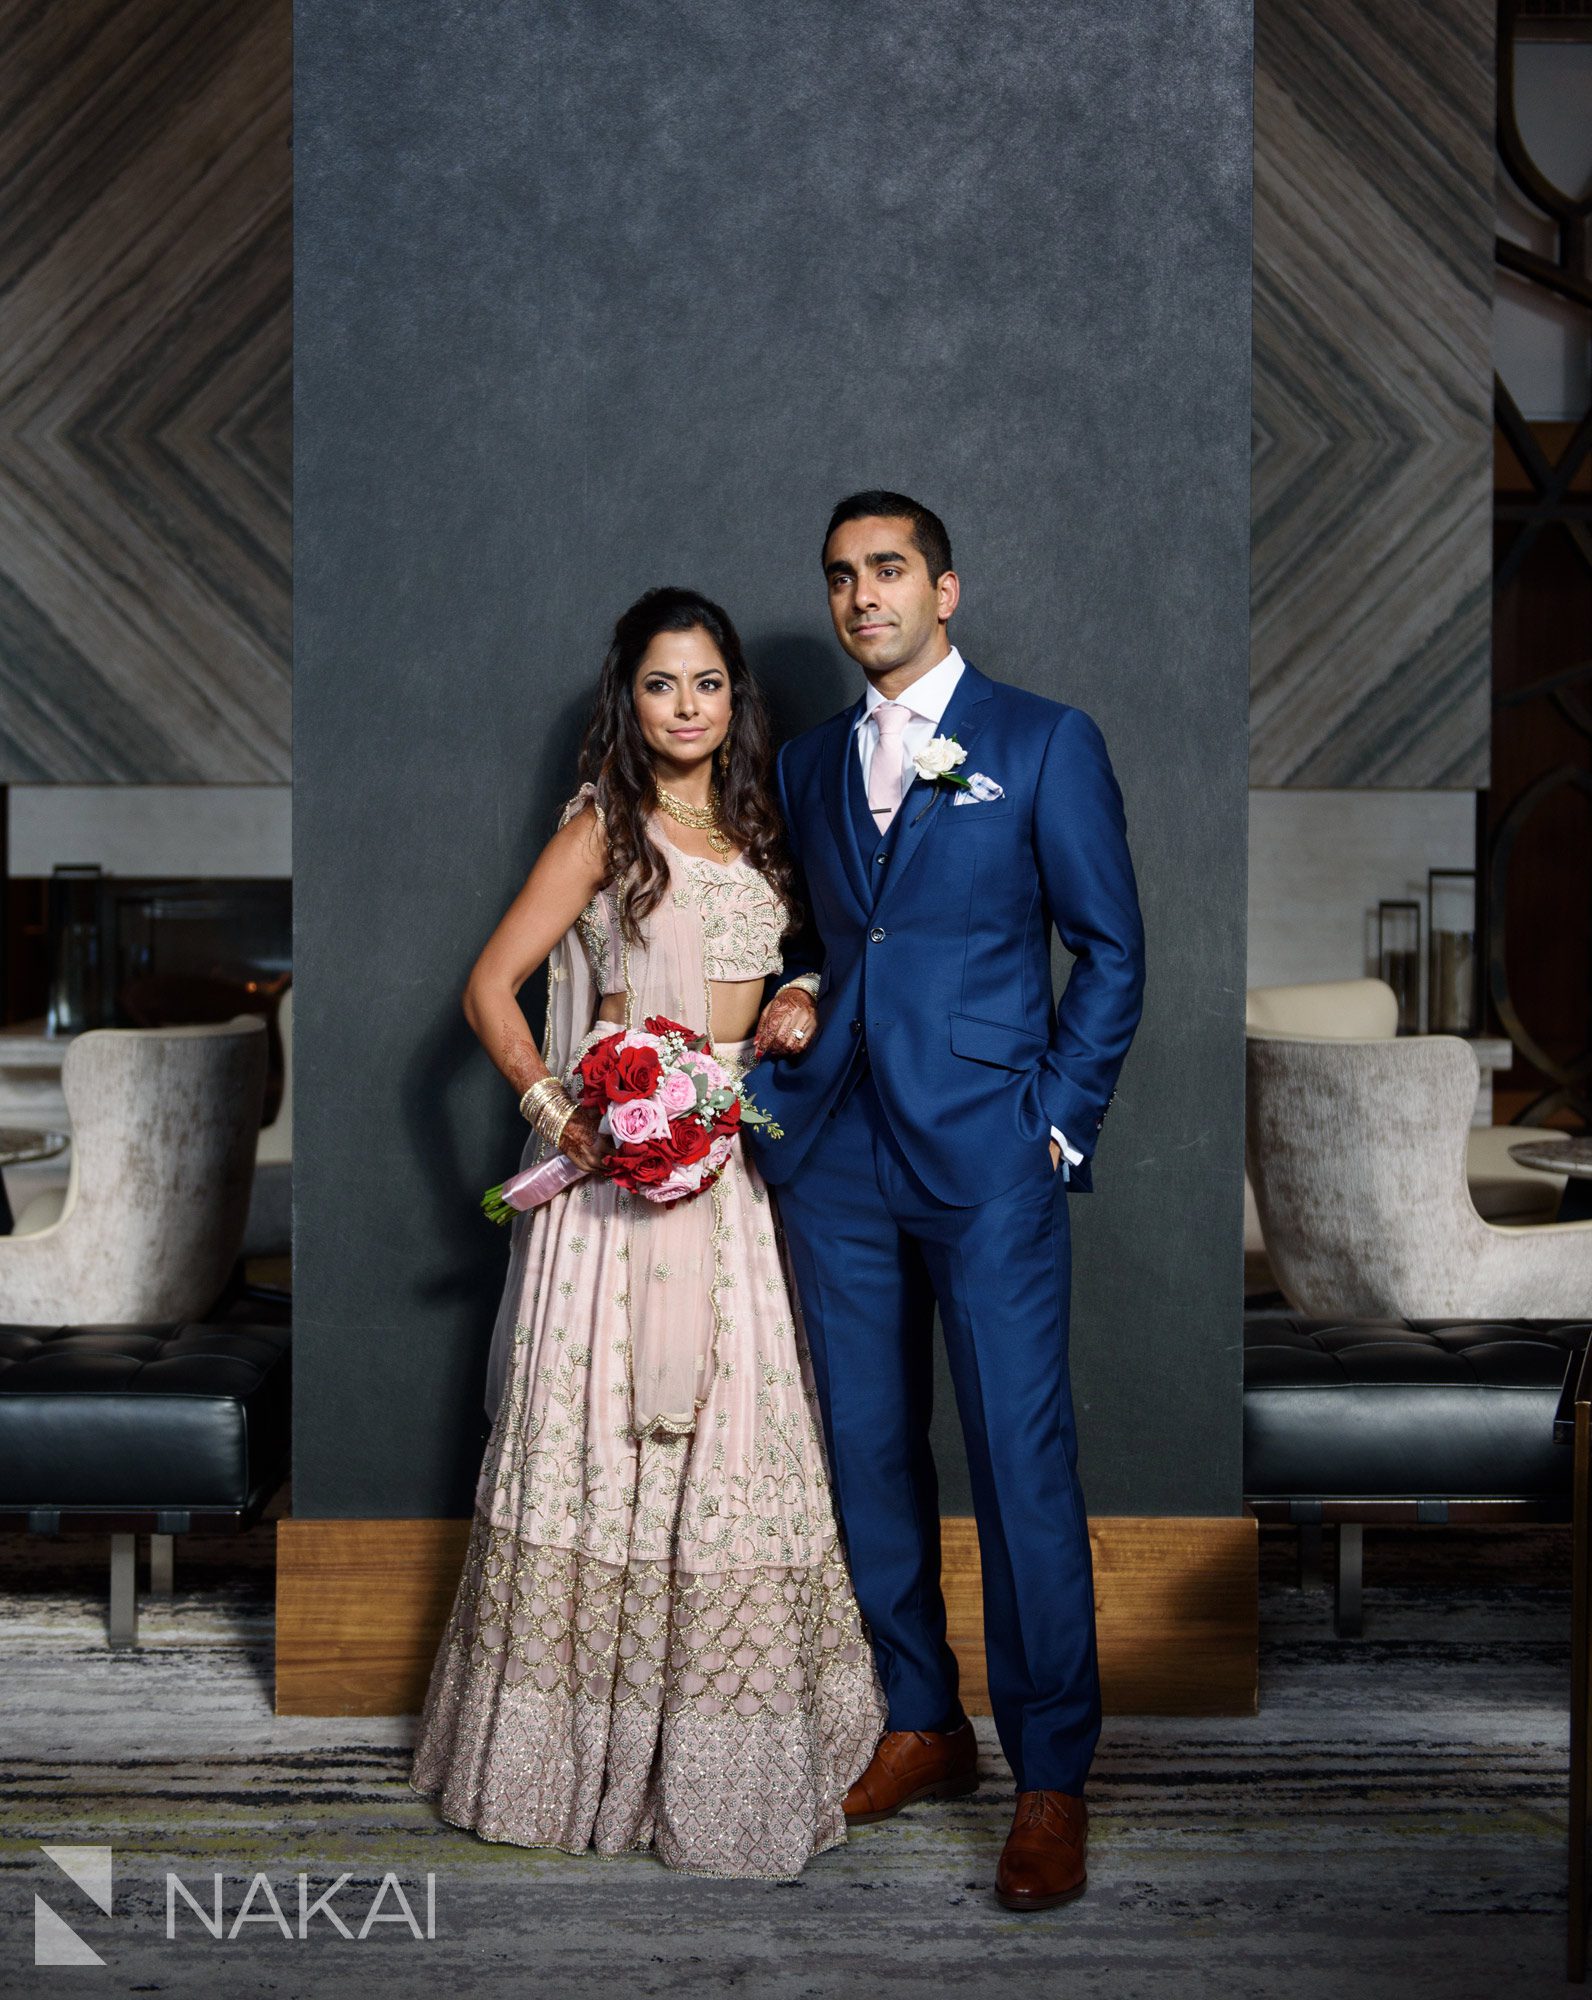 Loews Chicago wedding photos lobby Indian wedding